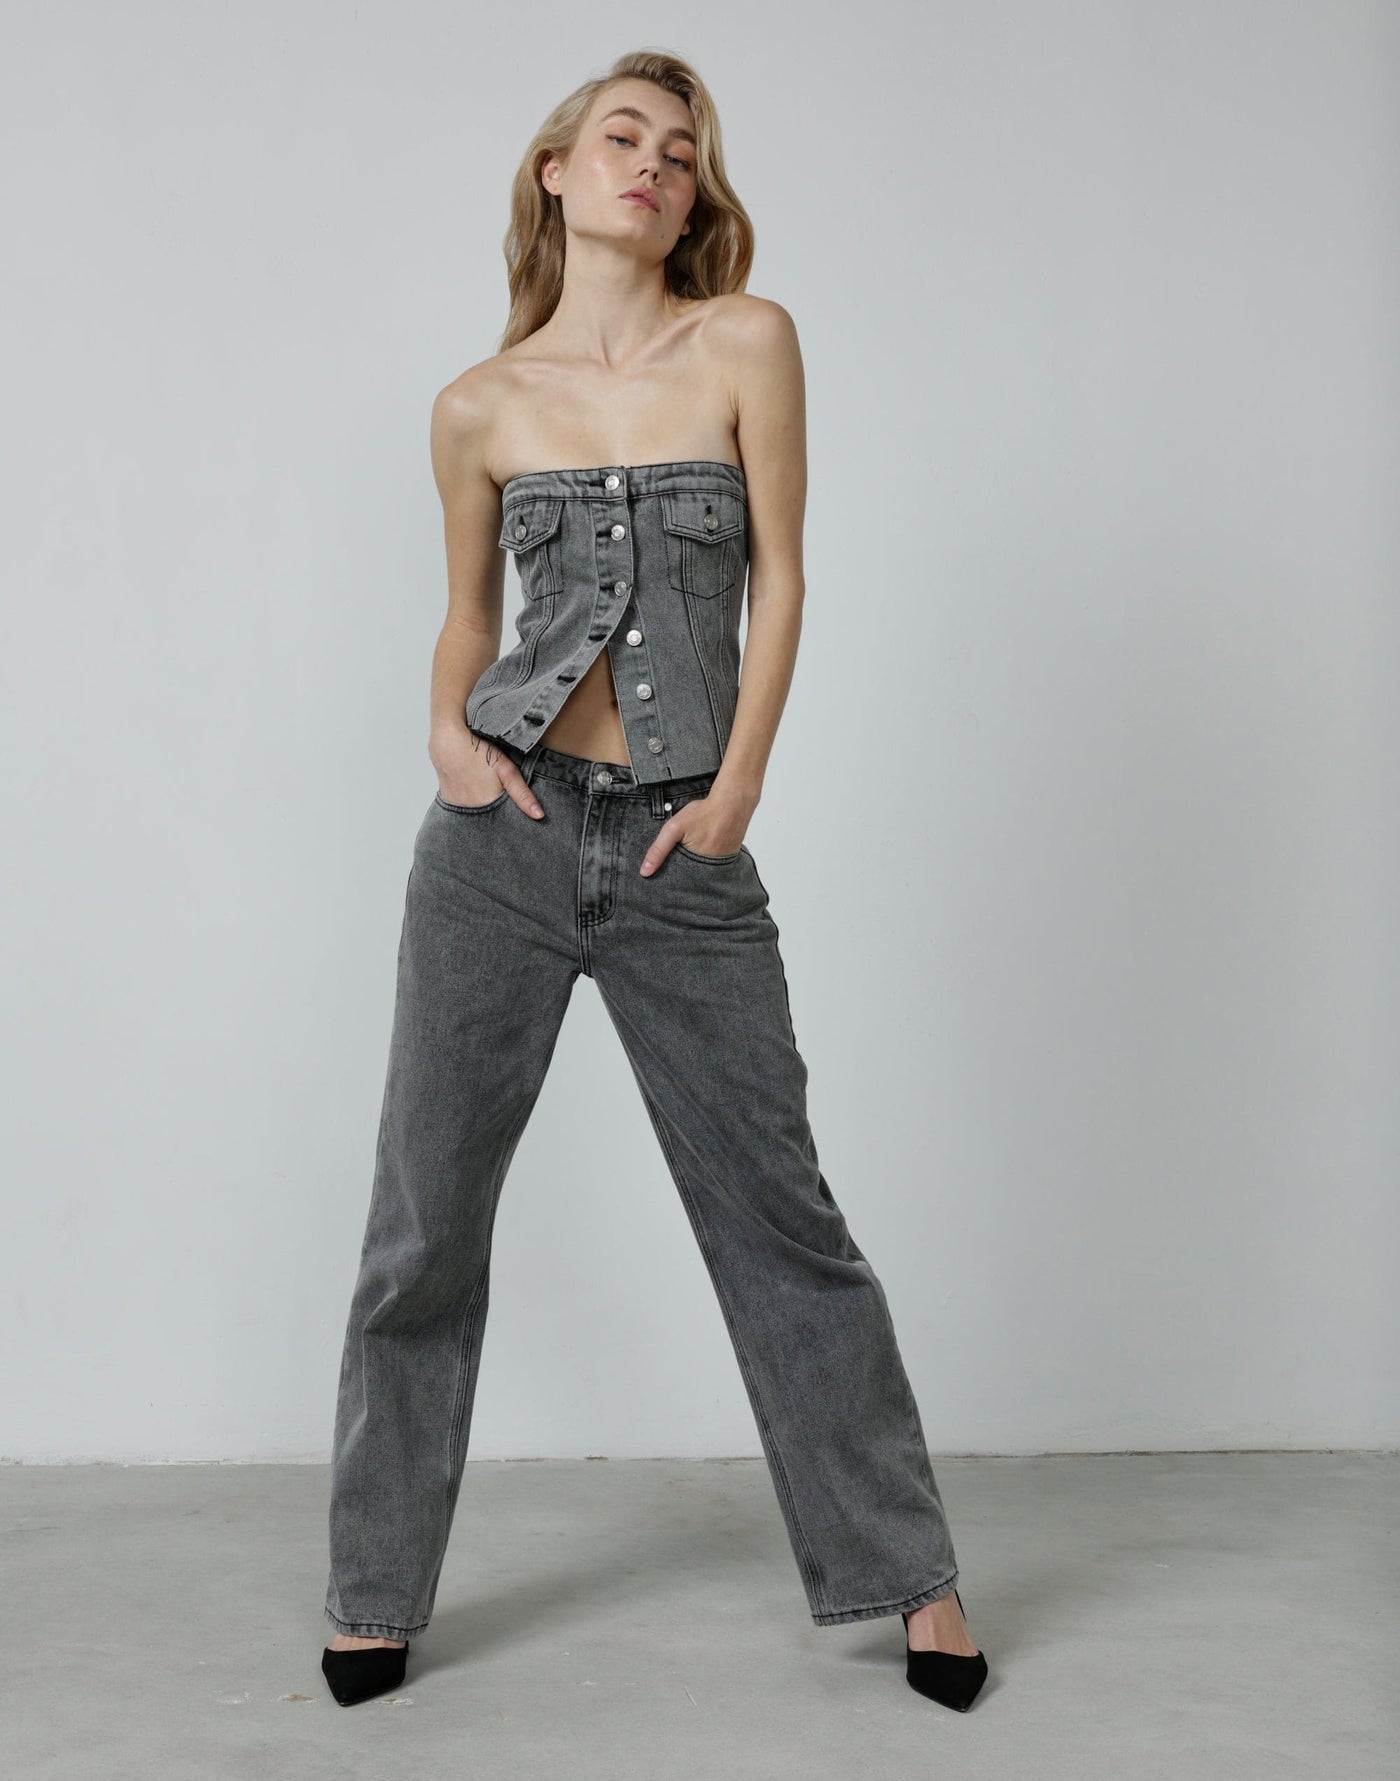 Collision Denim Corset Top (Acid Wash) - Grey Denim Strapless Corset - Women's Top - Charcoal Clothing